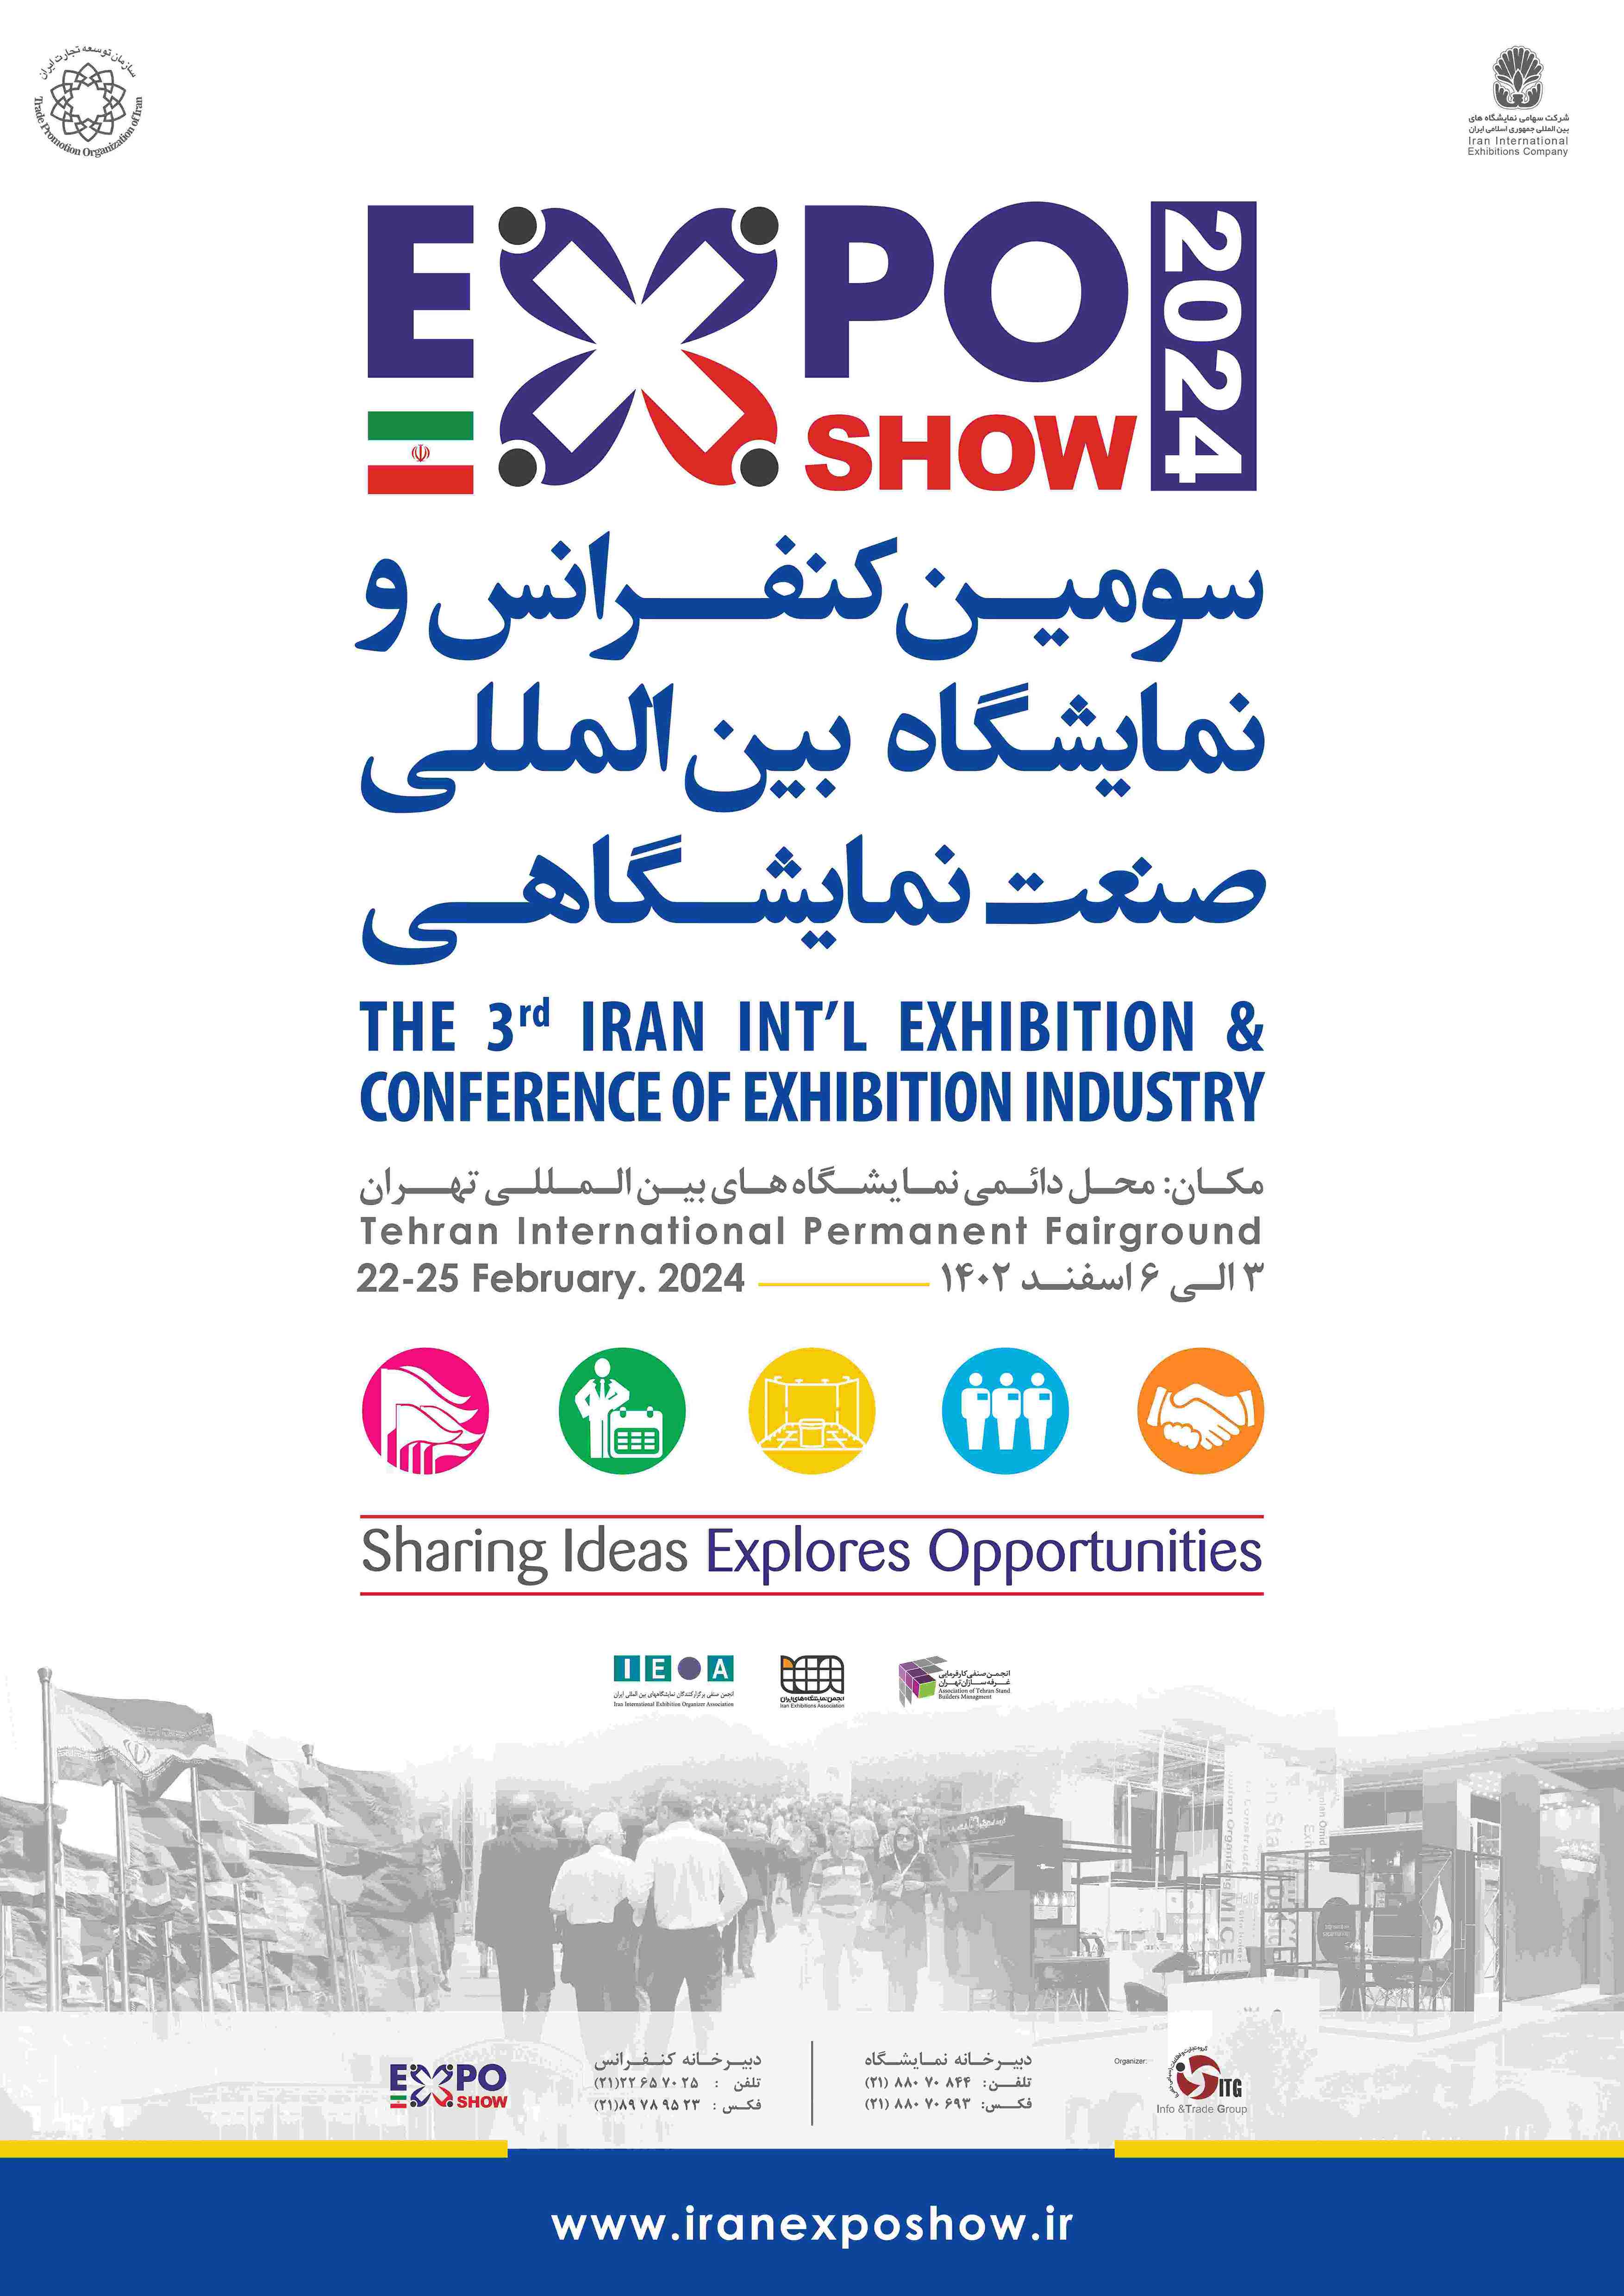 Expo Show 202